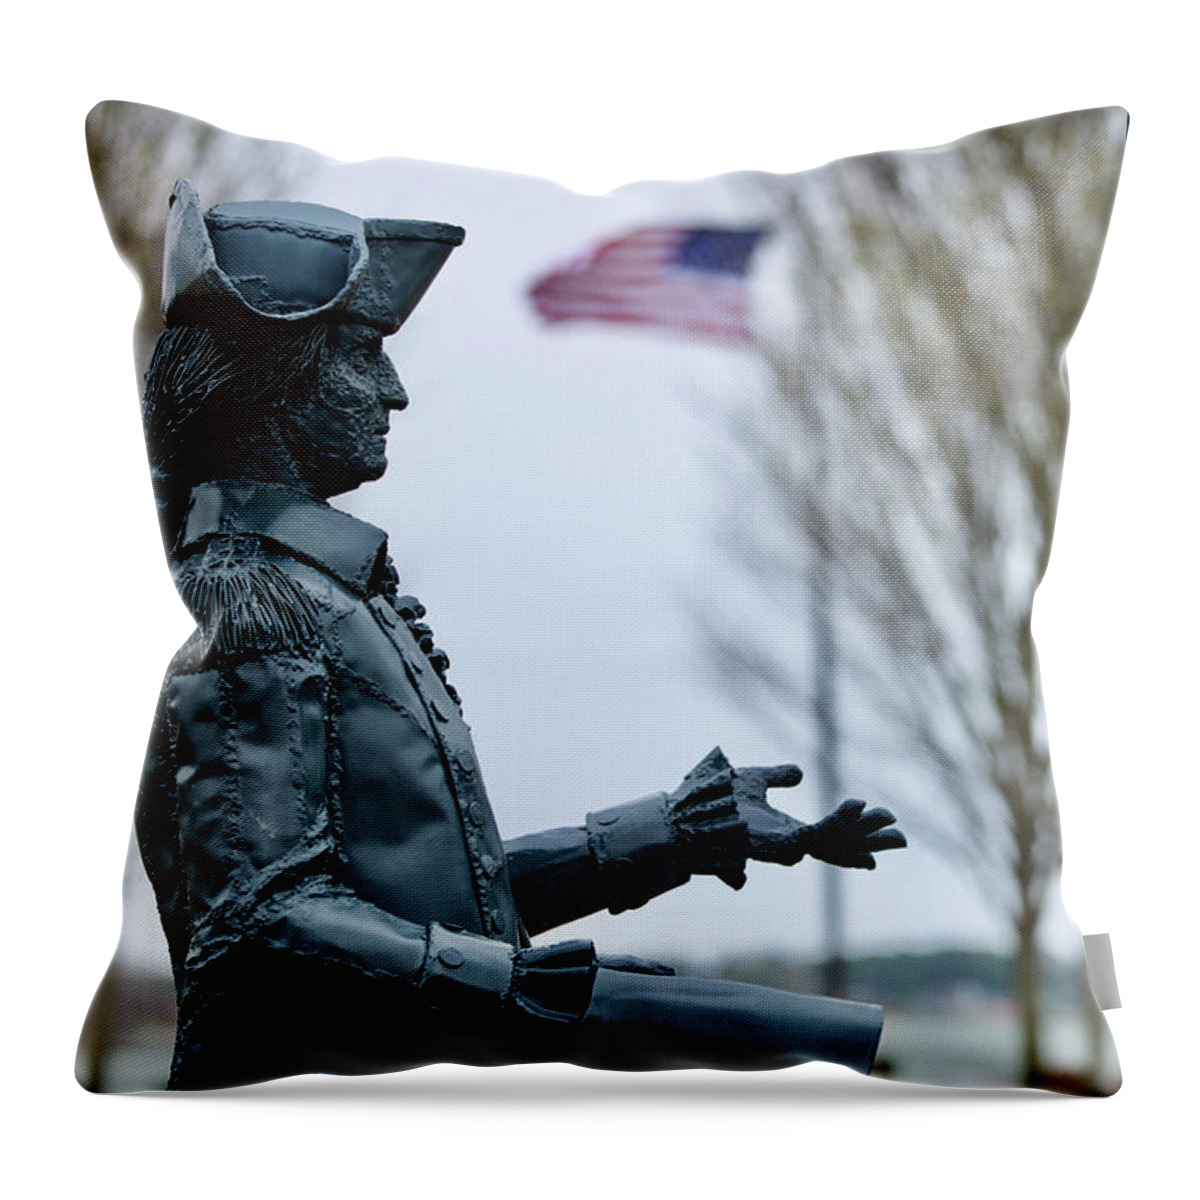 Yorktown Throw Pillow featuring the photograph General George Washington Statue in Yorktown by Rachel Morrison